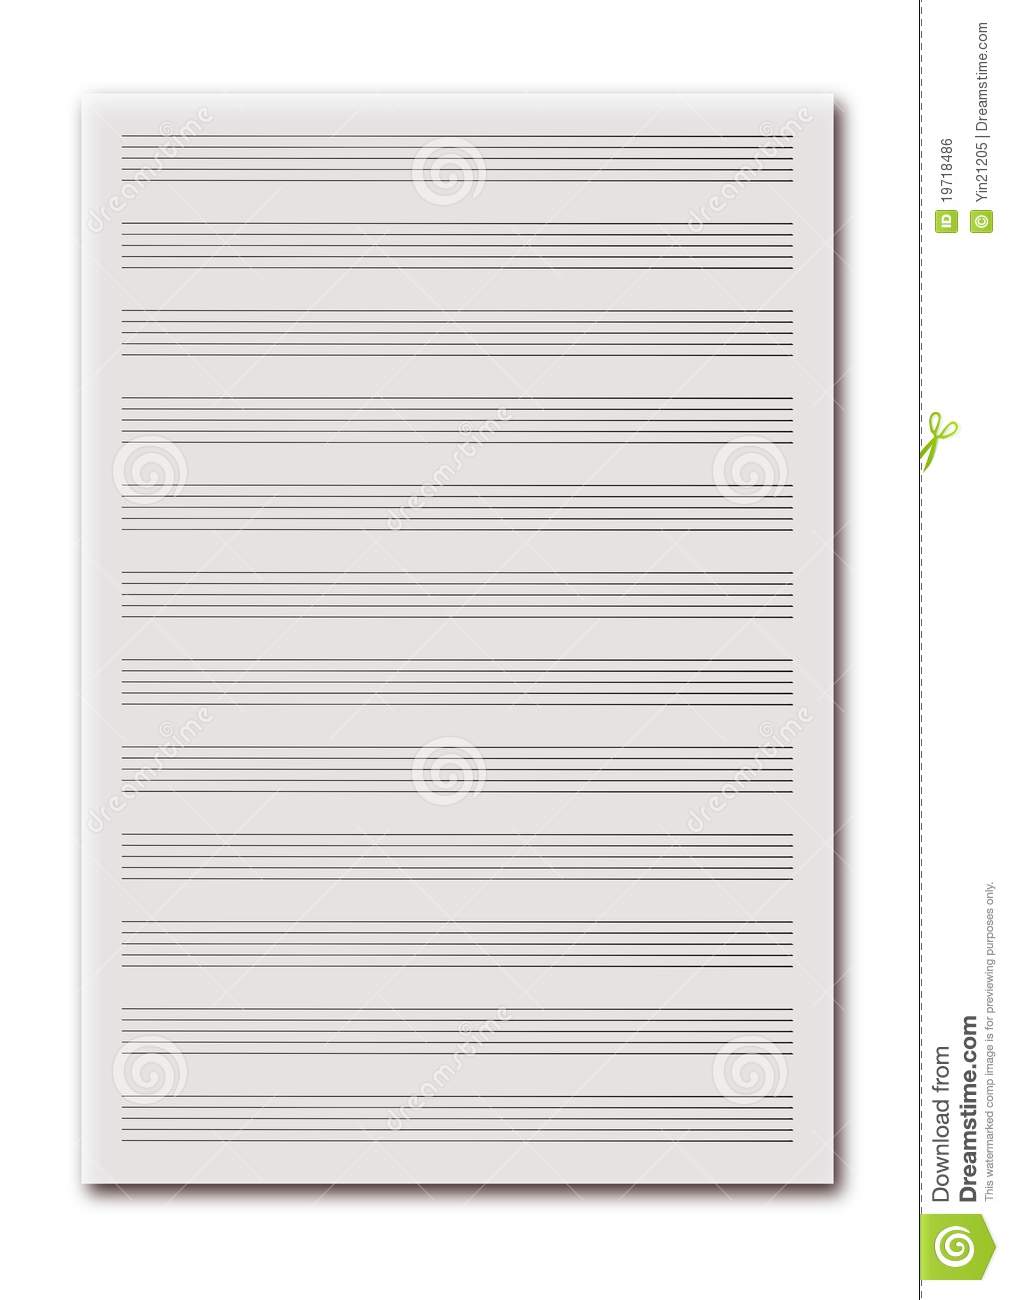 Blank Music Sheet Royalty Free Stock Image   Image  19718486